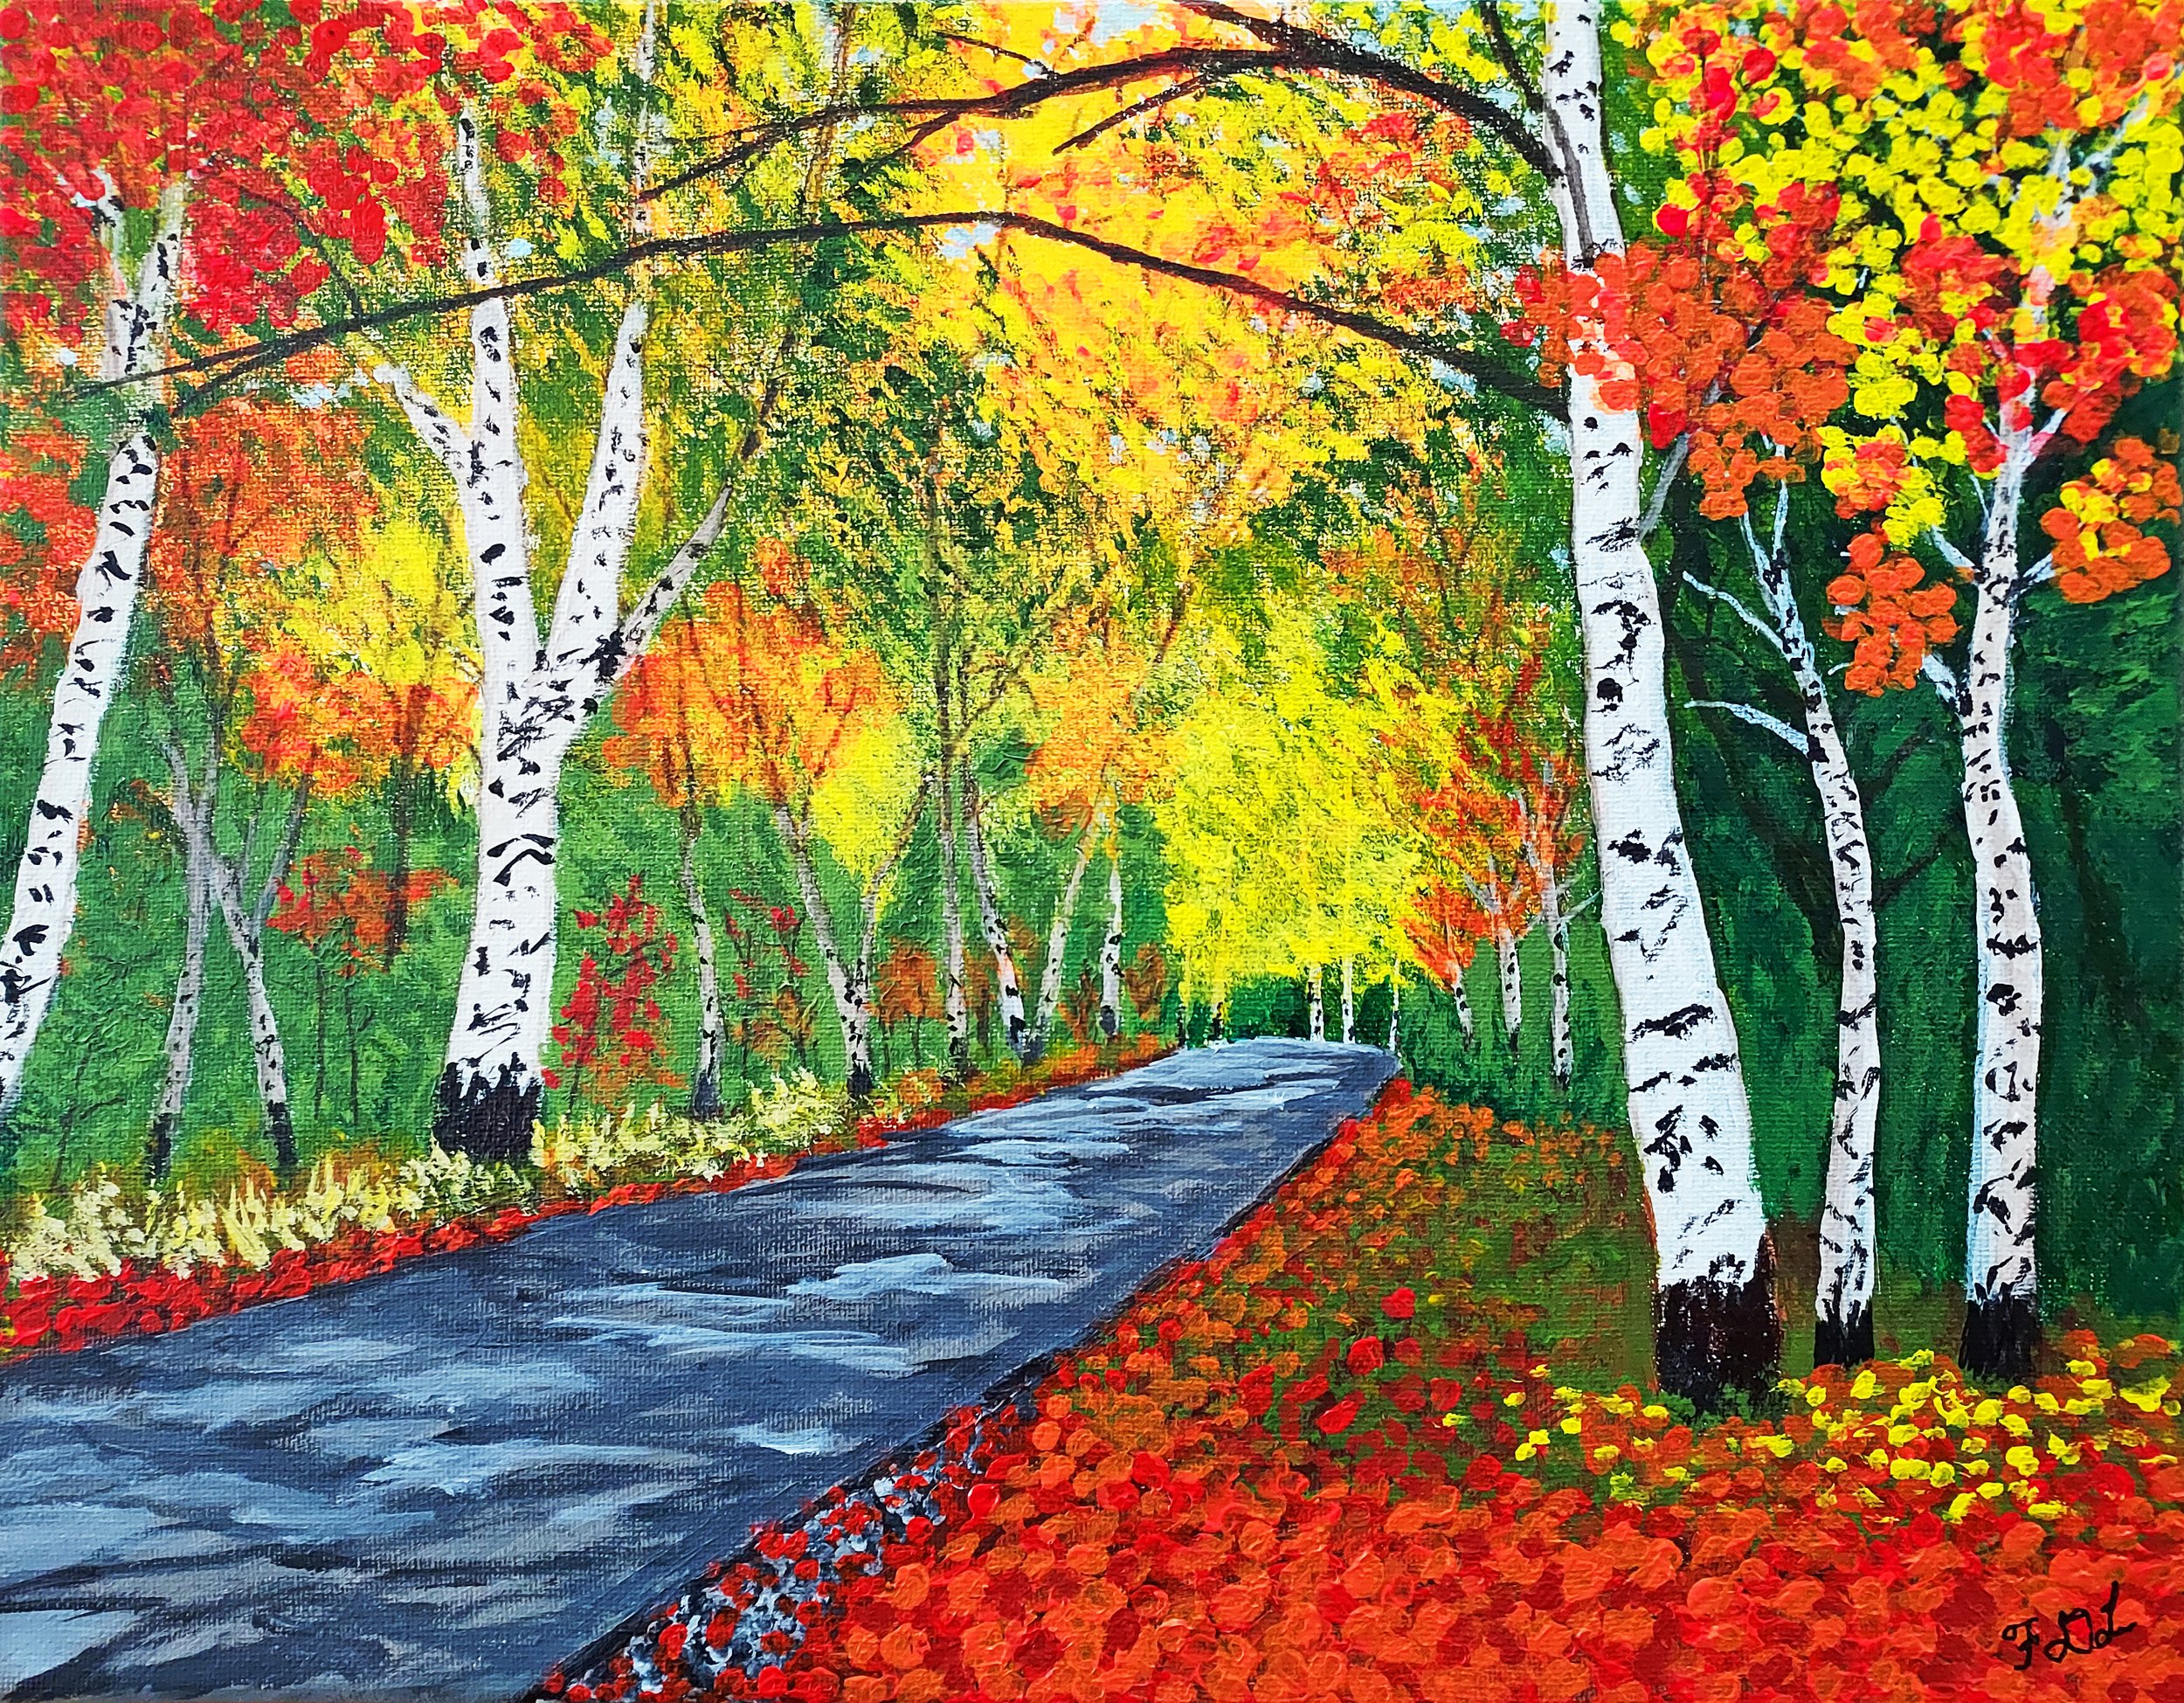 FRALIT005PR - Birch Grove By Highway in Autumn - A print by Frank Littman.jpg